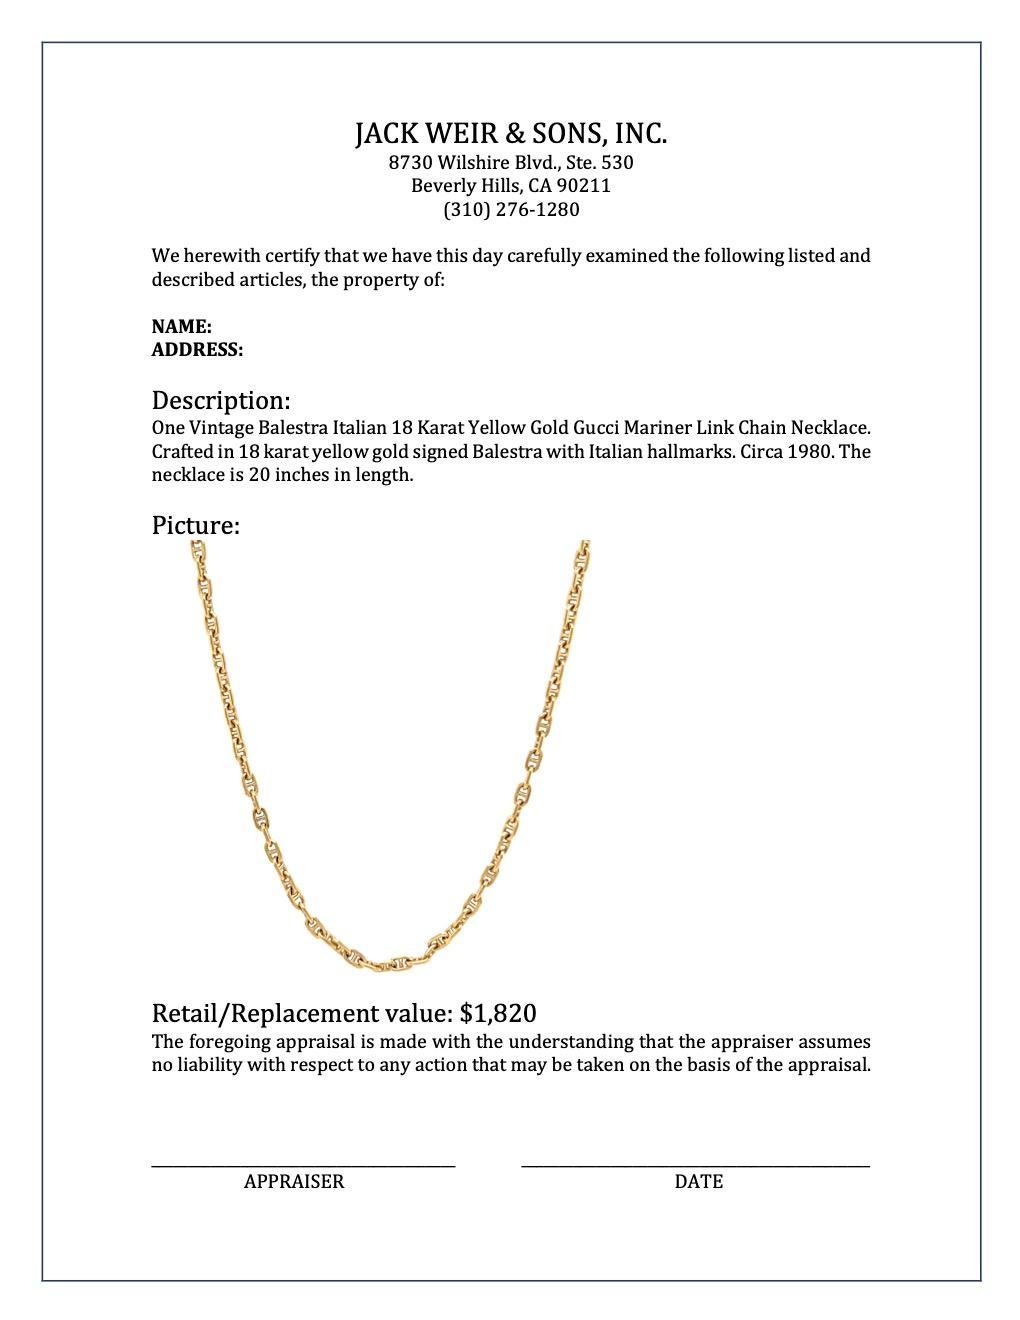 Vintage Balestra Italian 18 Karat Yellow Gold Gucci Mariner Link Chain Necklace 1